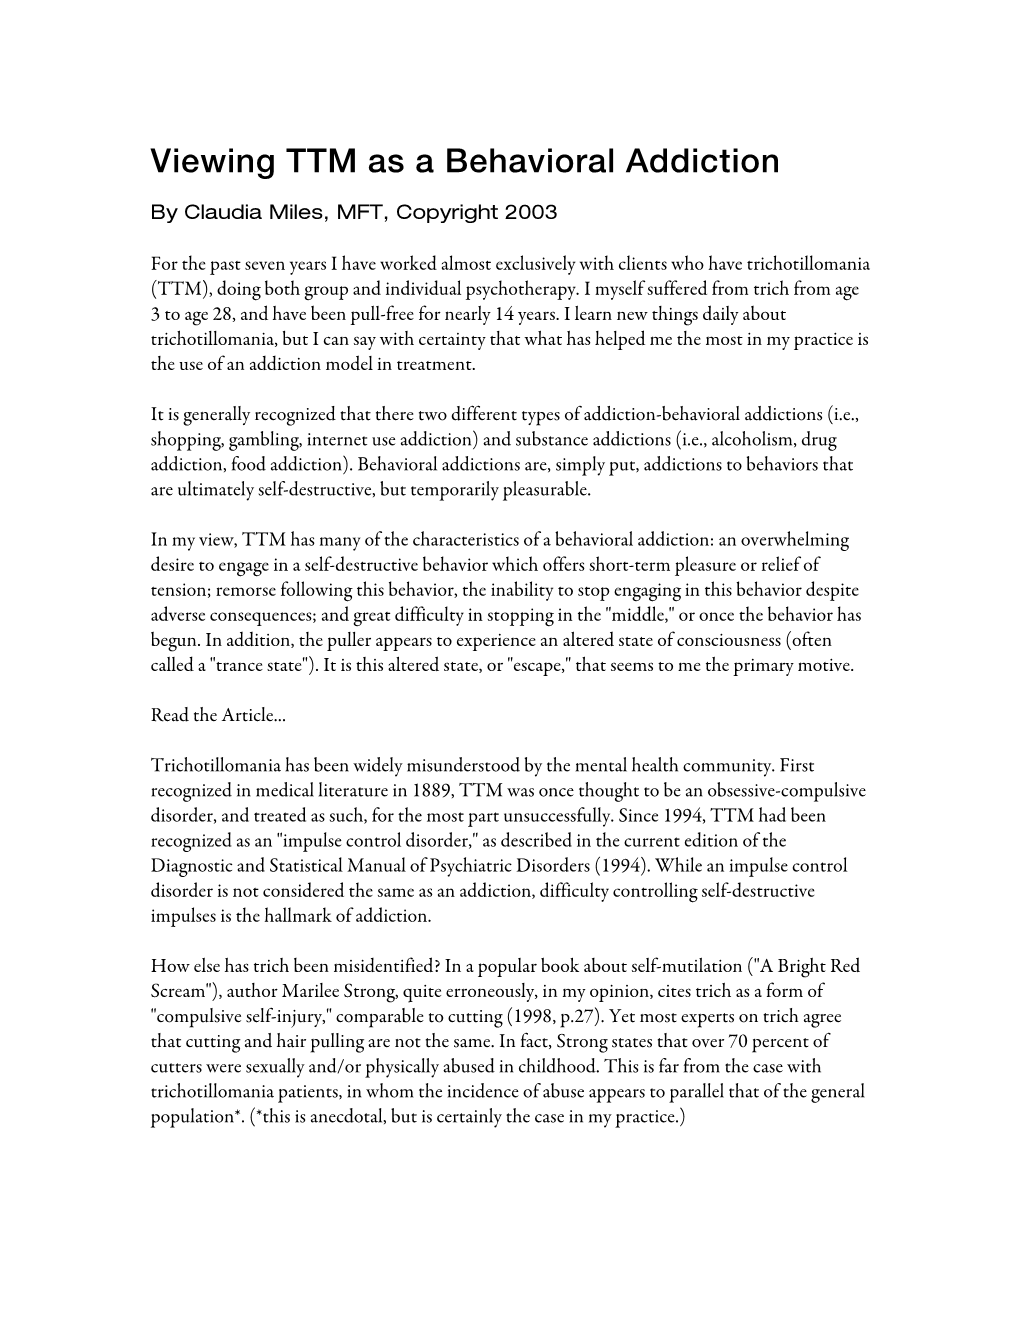 Viewing TTM As a Behavioral Addiction